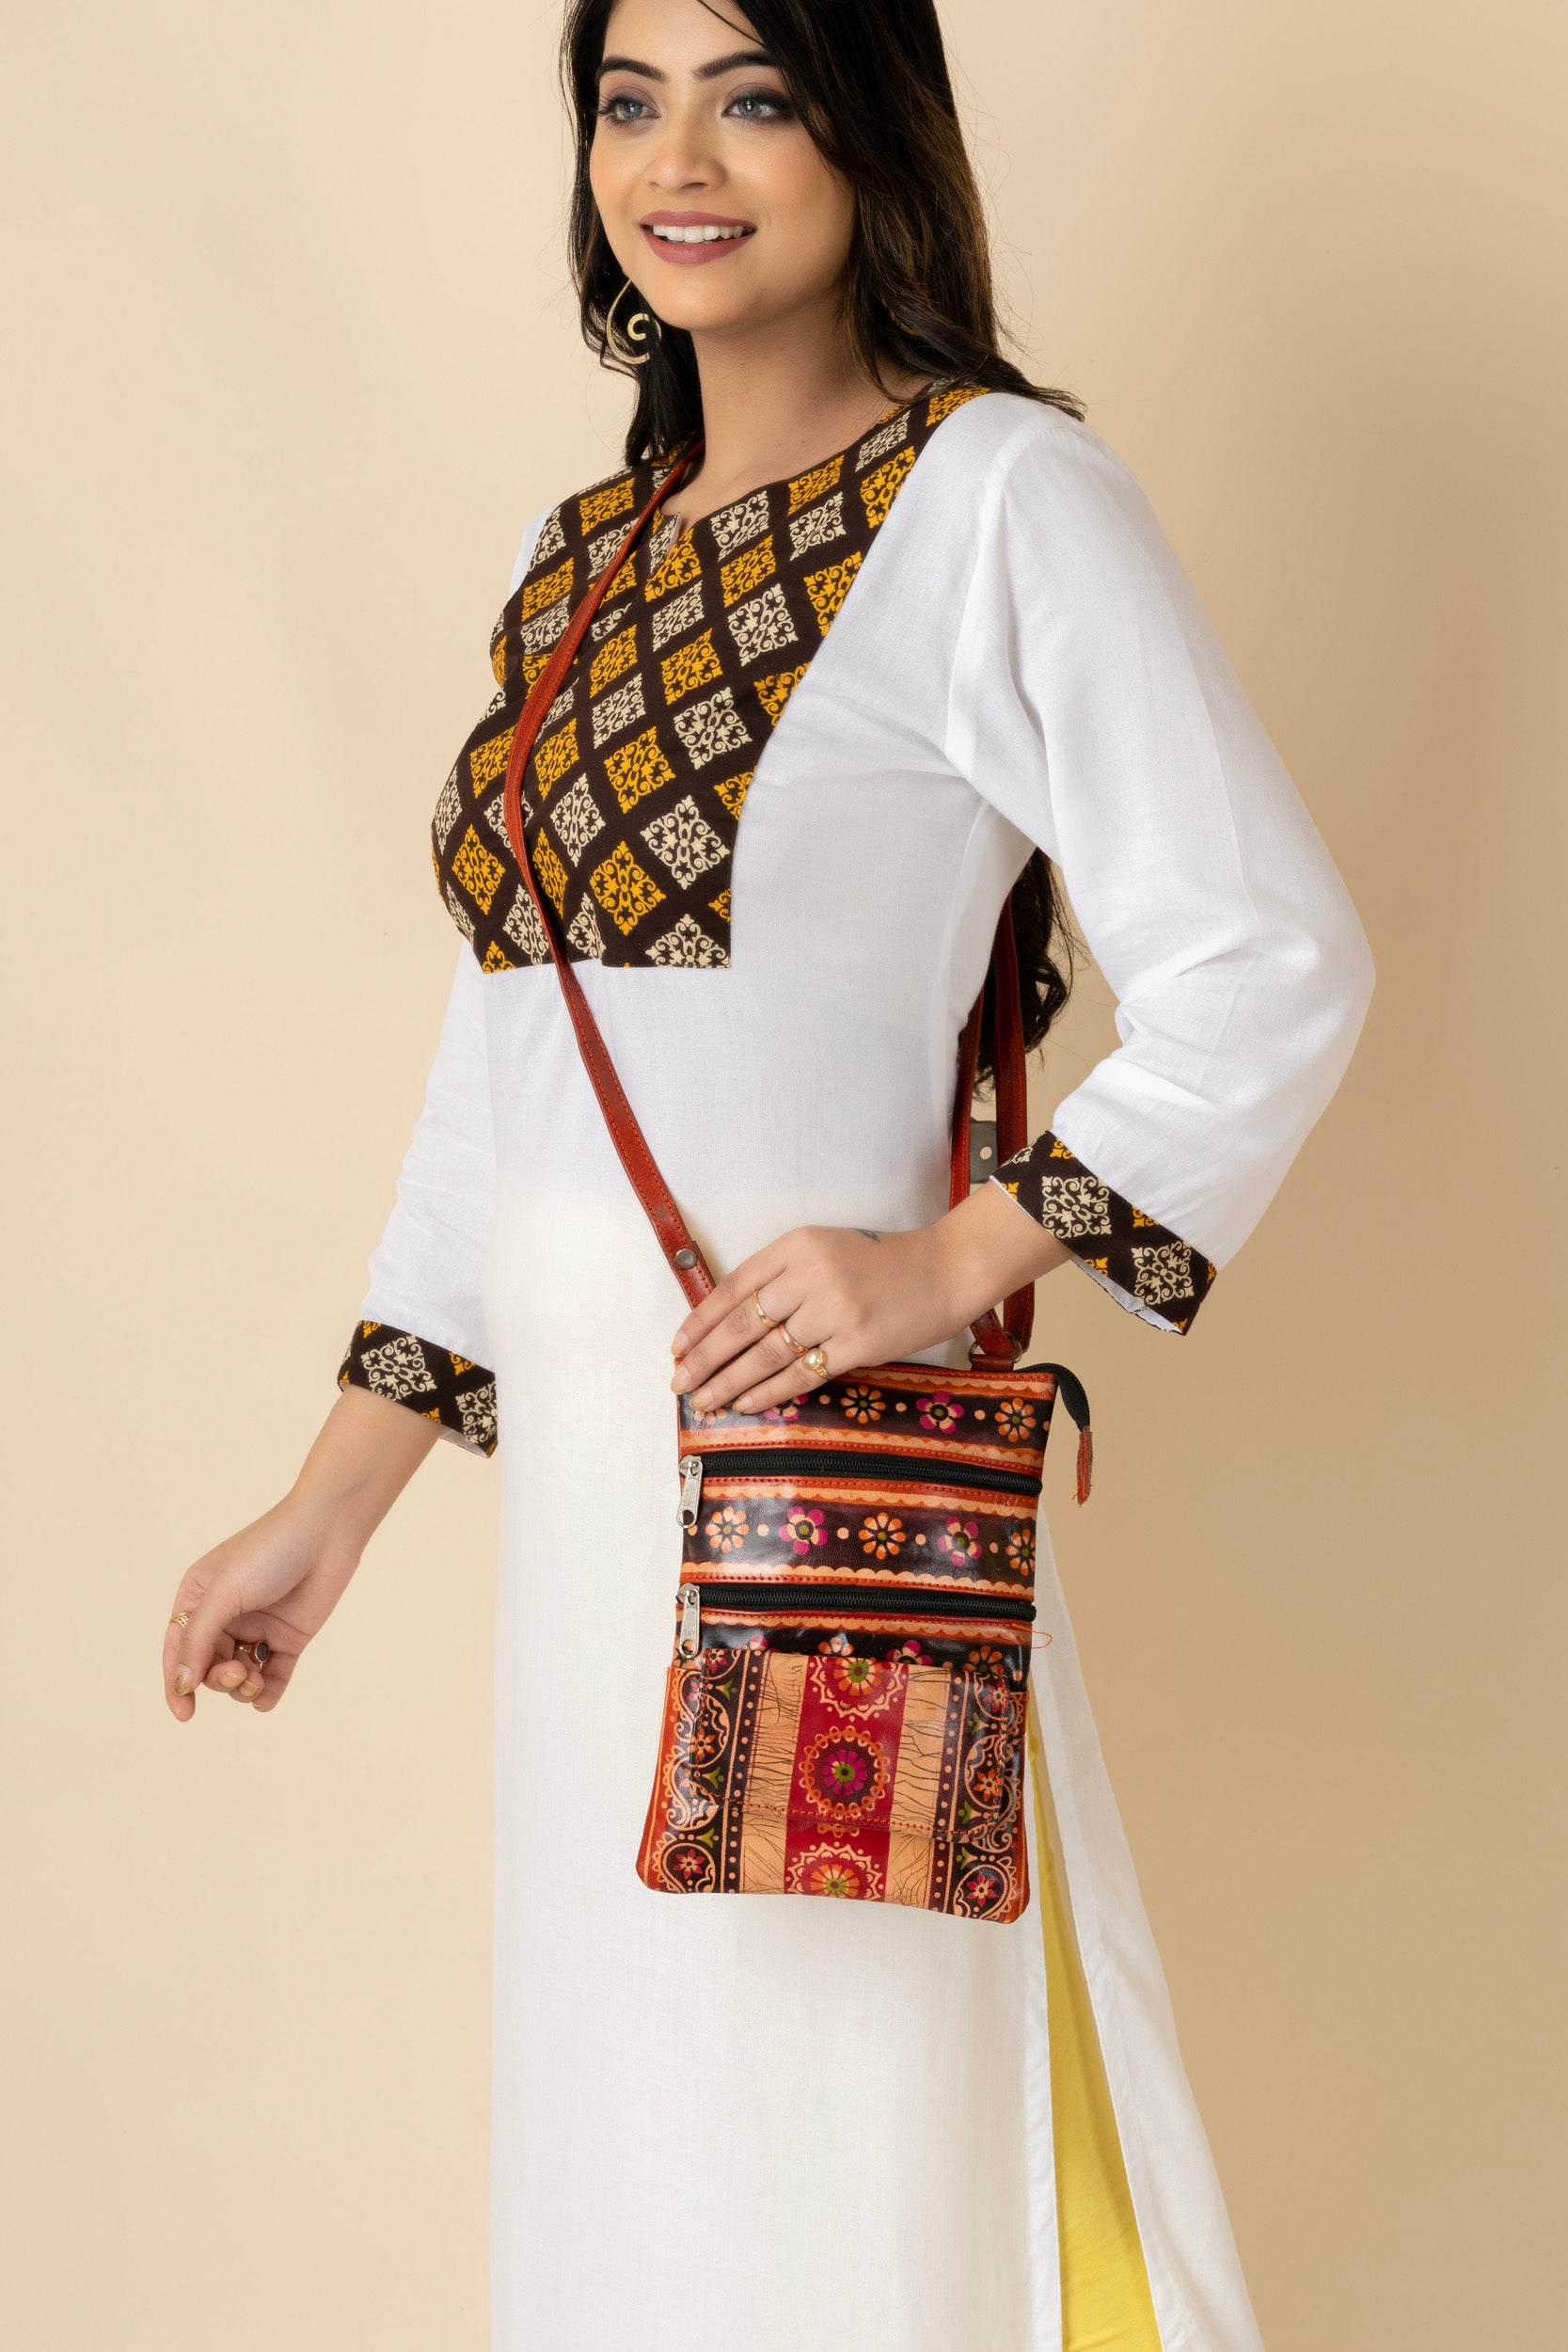 shantiniketan-leather-traditional-printed-women-brown-cross-body-sling-messenger-bag-9-7-mb04